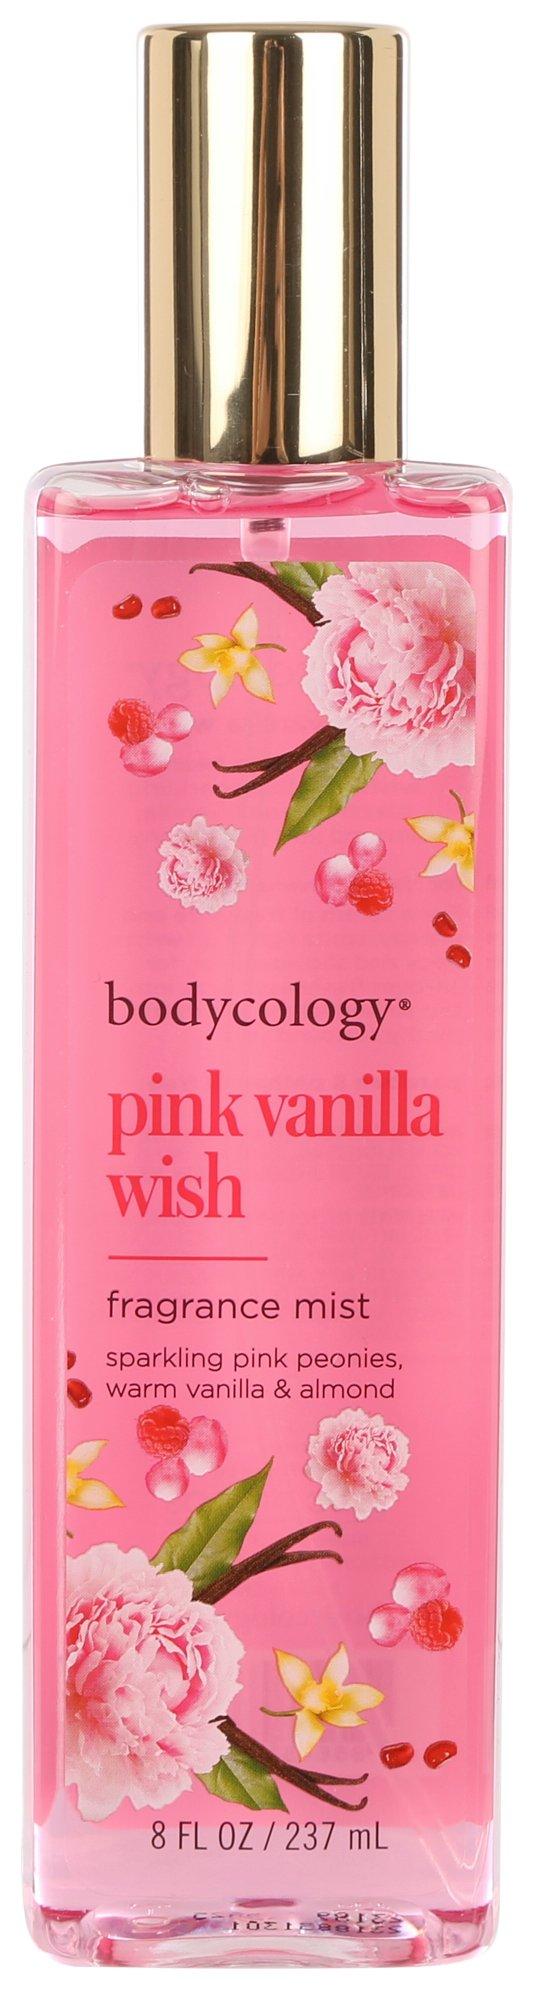 8 Fl.Oz. Pink Vanilla Wish Fragrance Mist